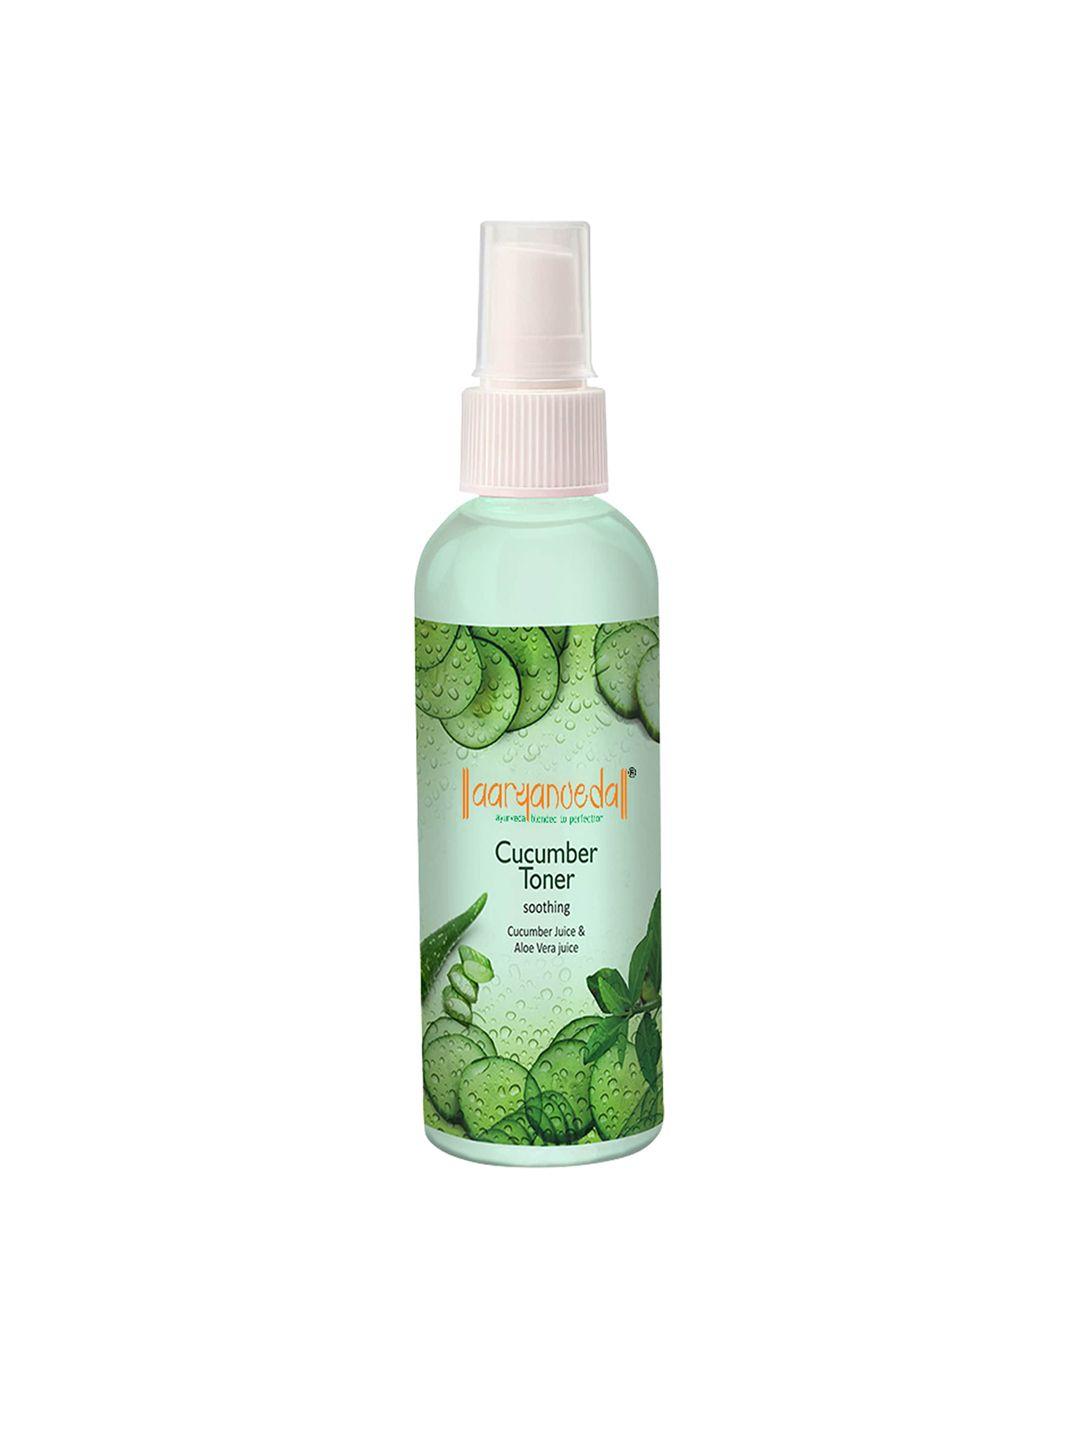 aryanveda cucumber face toner for glowing, dry skin & pores tightening - 100 ml